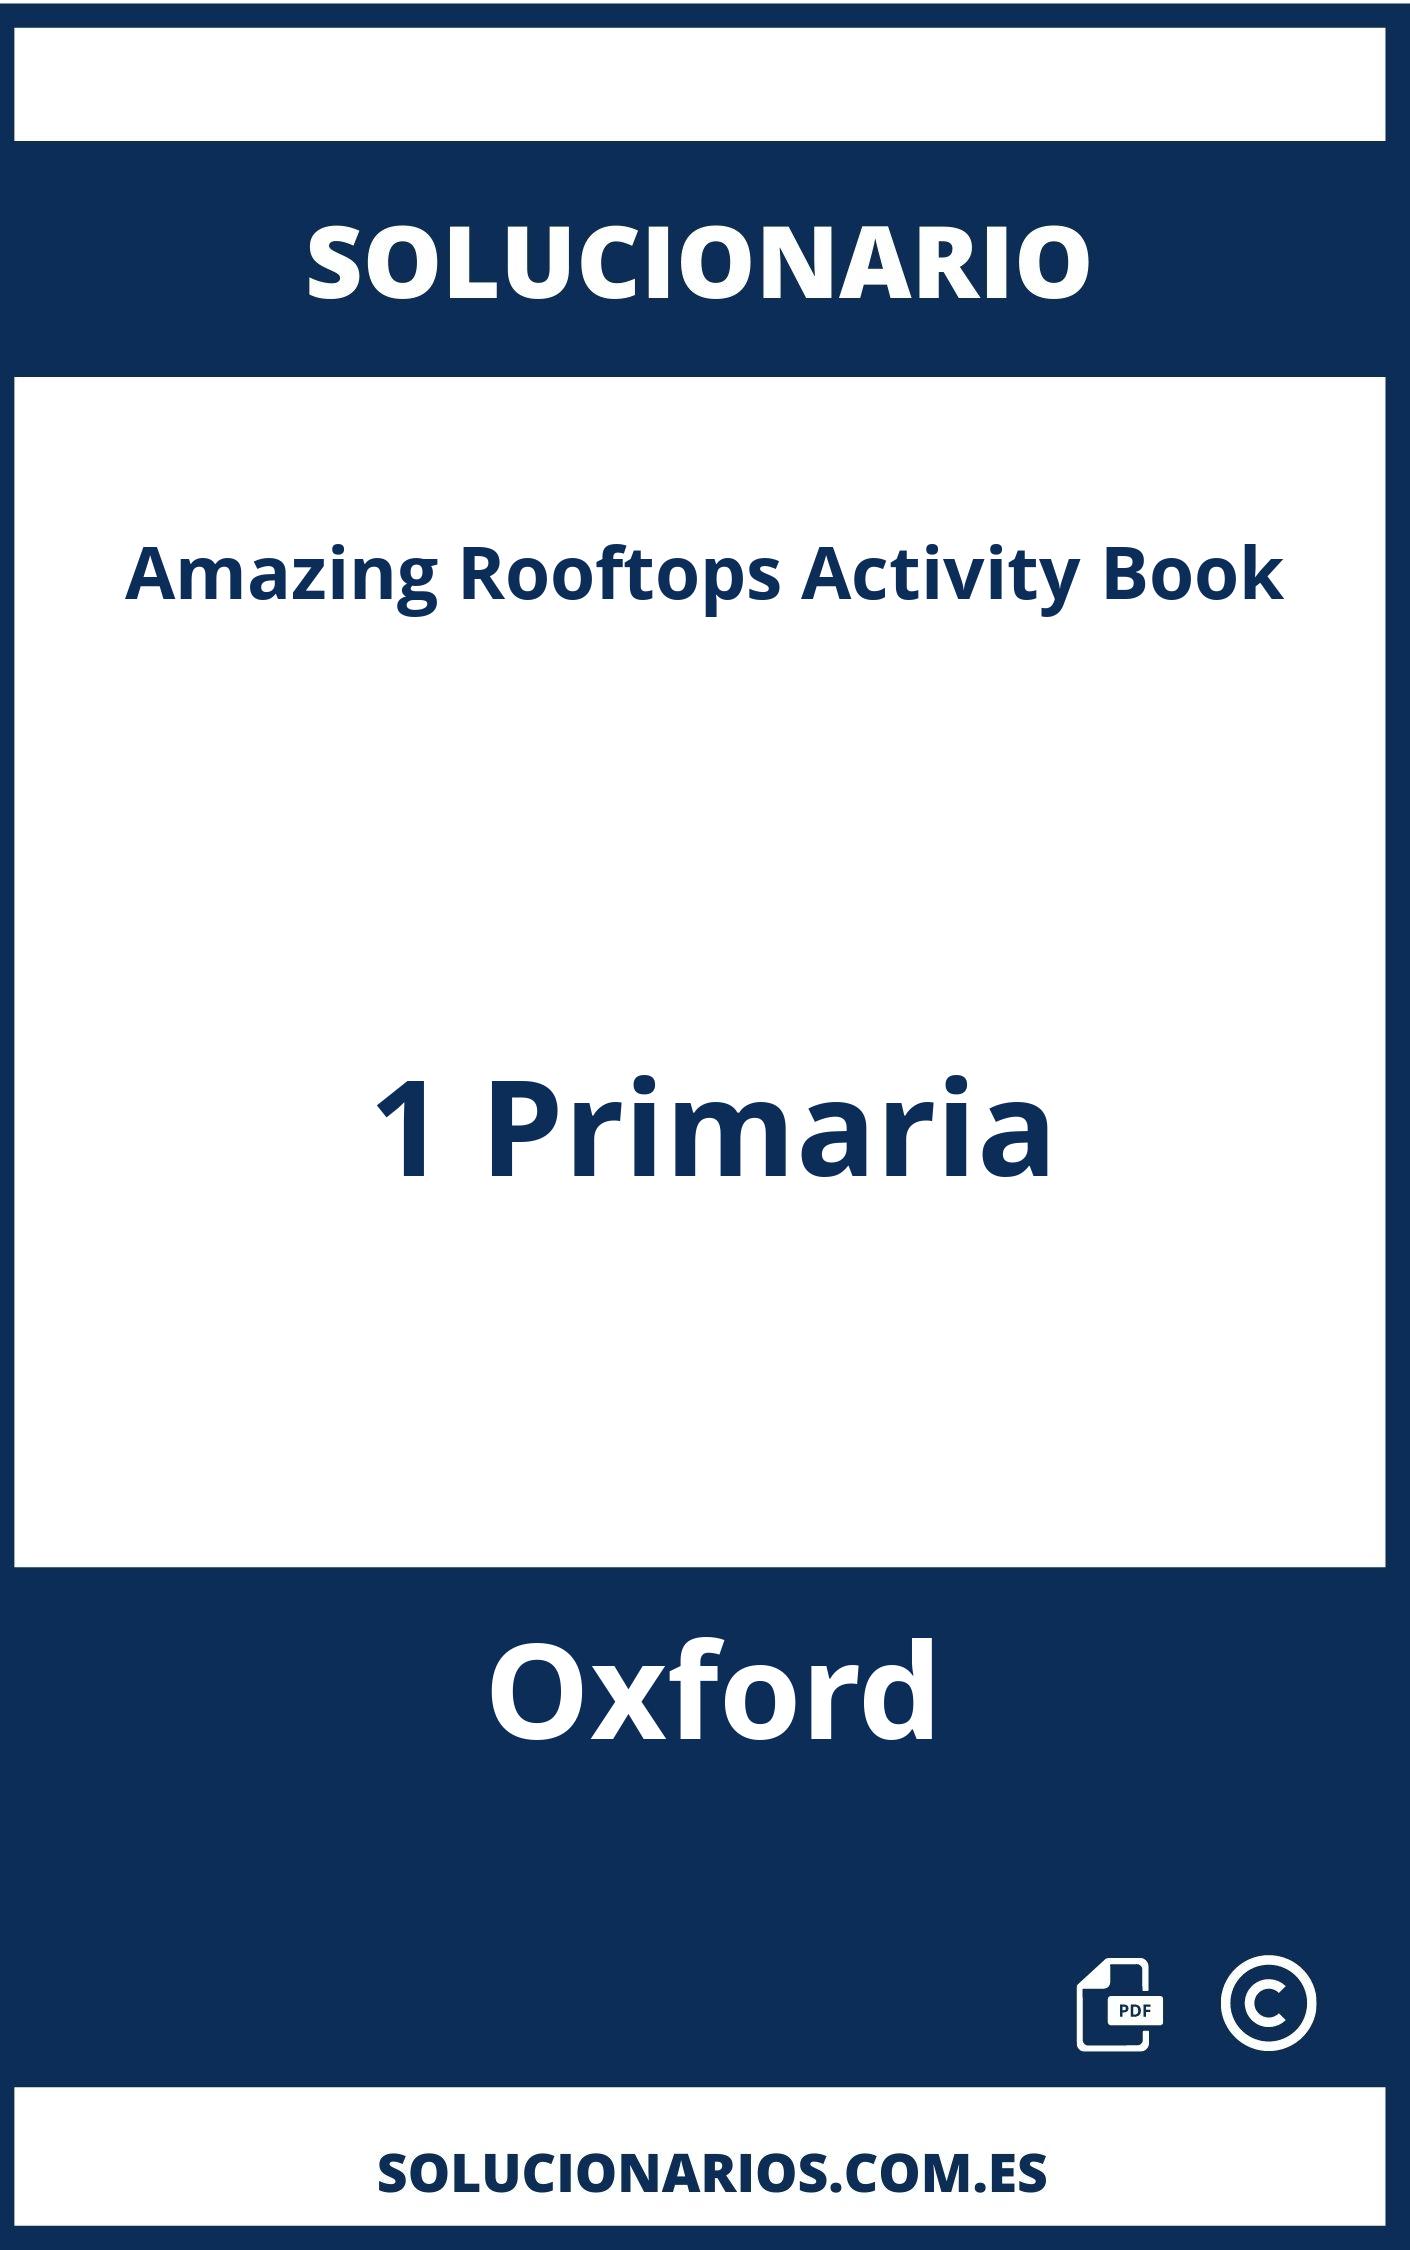 Solucionario Amazing Rooftops Activity Book 1 Primaria Oxford